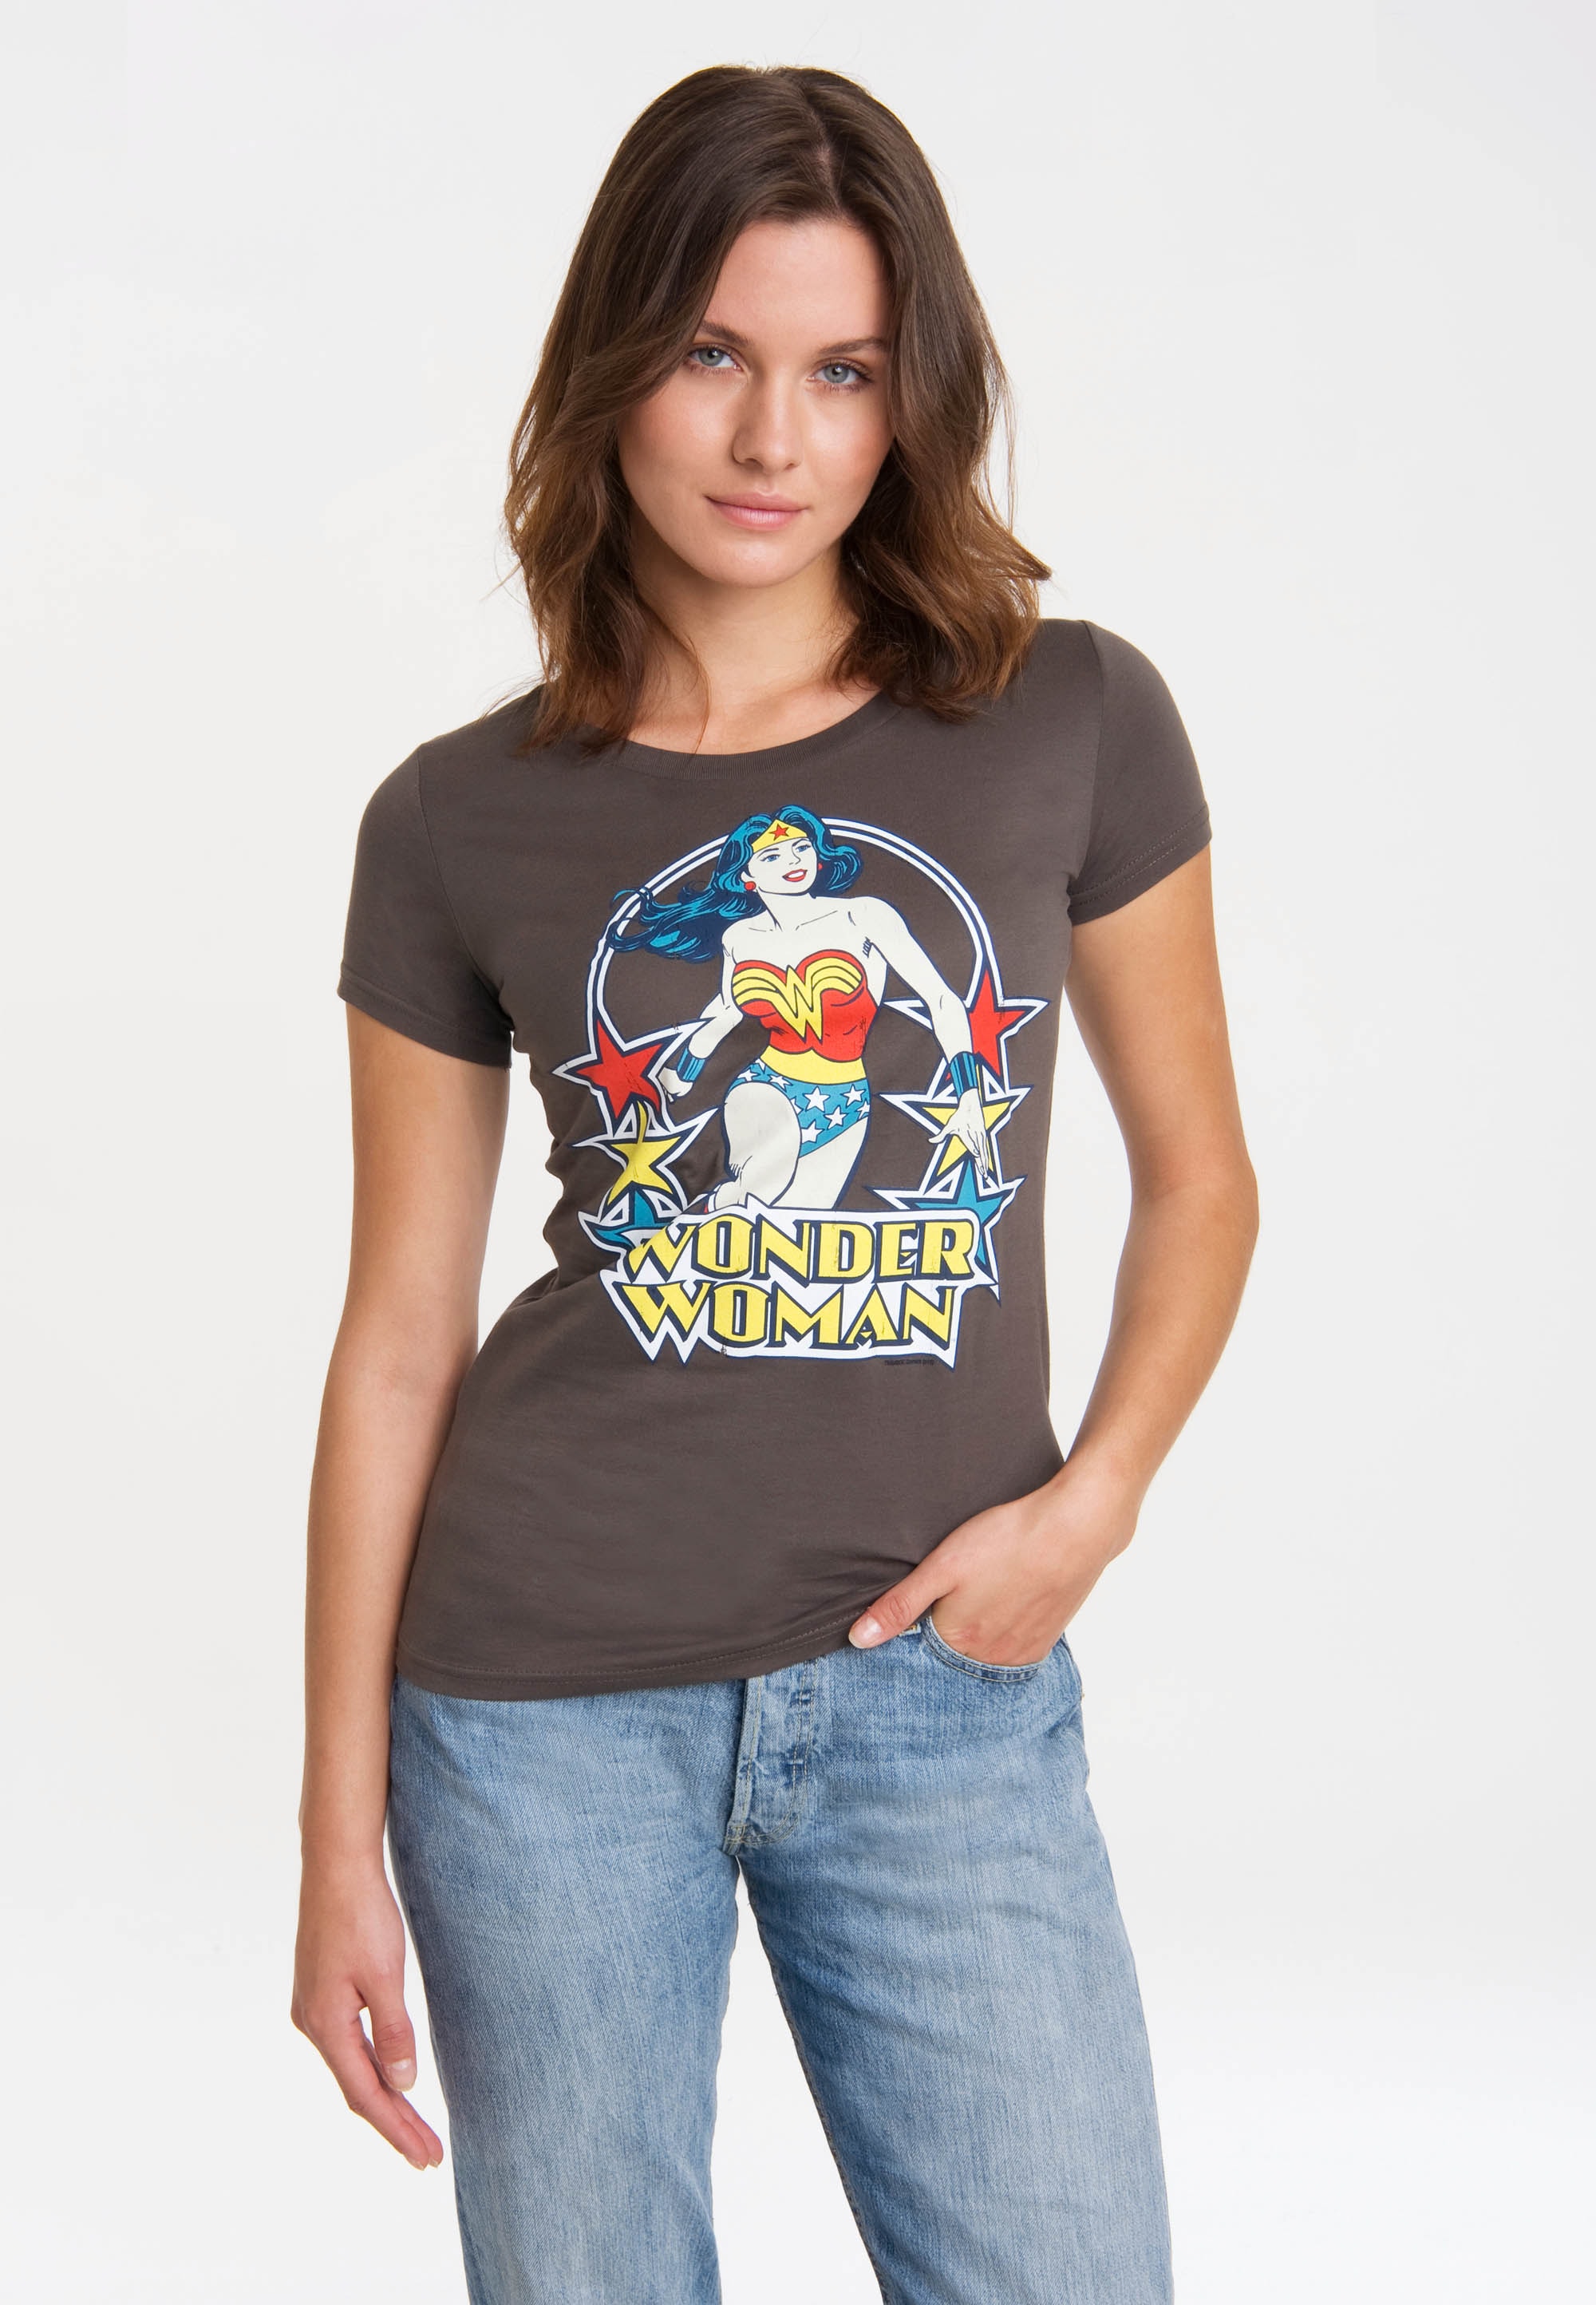 LOGOSHIRT T-Shirt »Print DC Comics kaufen mit lizenziertem Print Stars«, Woman Wonder